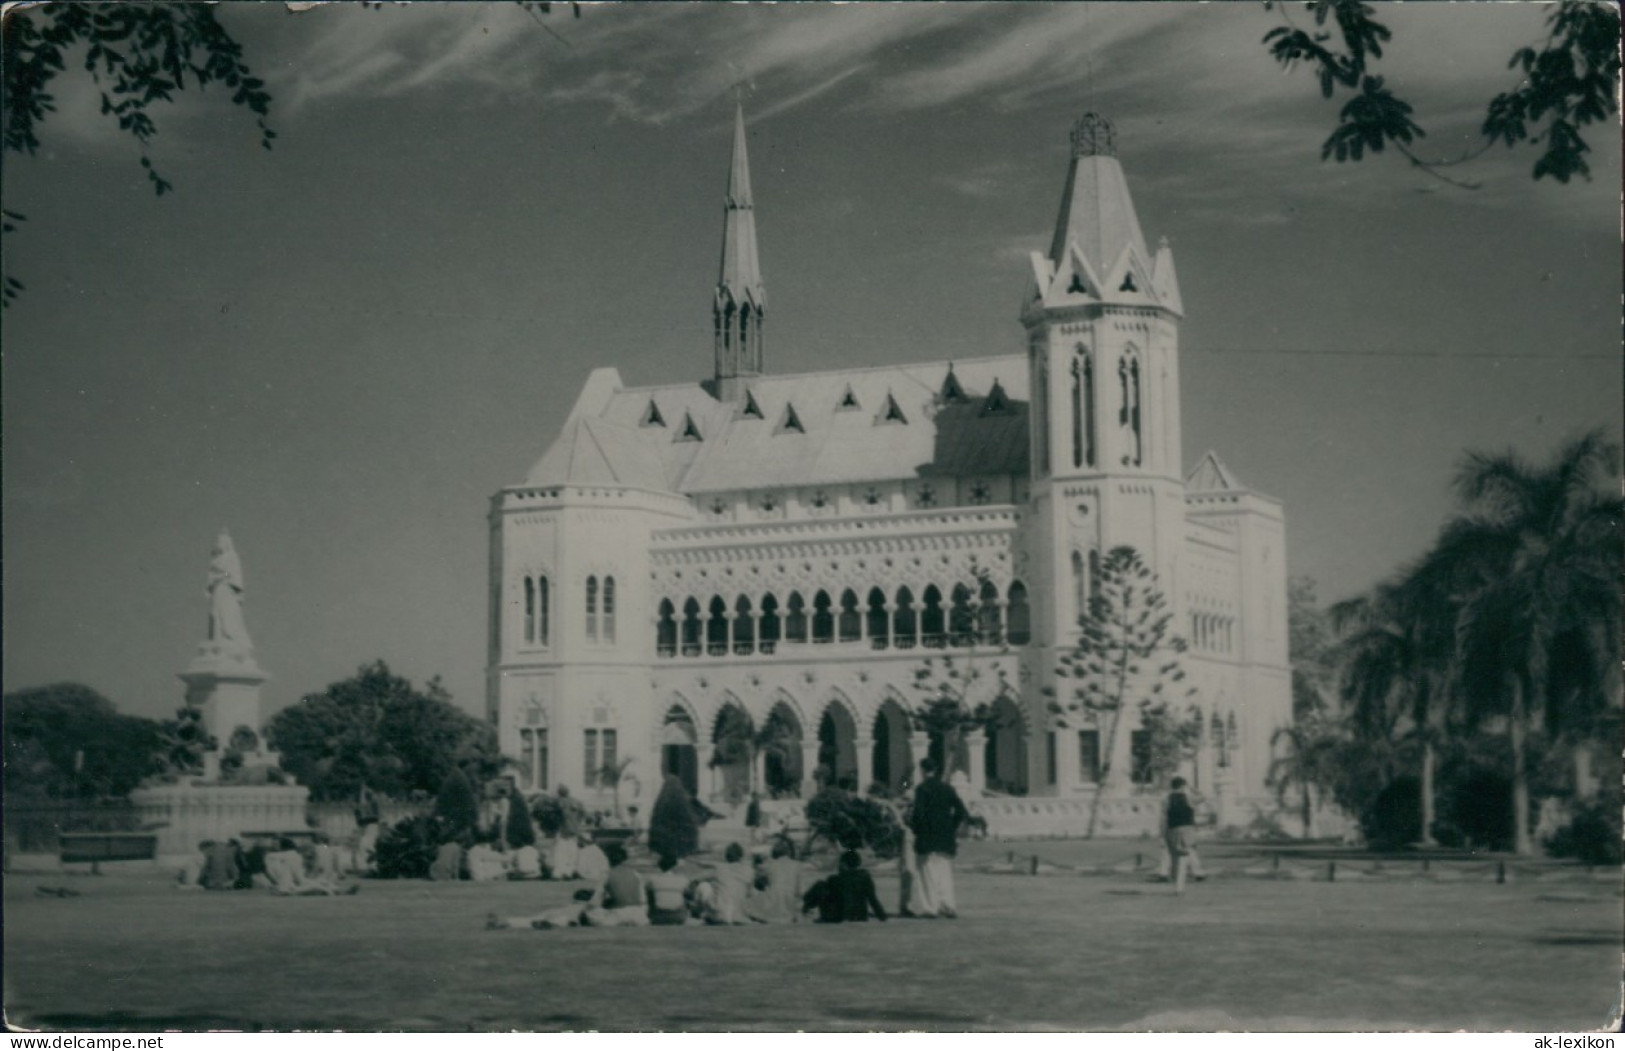 Postcard Karatschi (Karachi) The Frere Hall And Museum. Pakistan 1956 - Pakistán